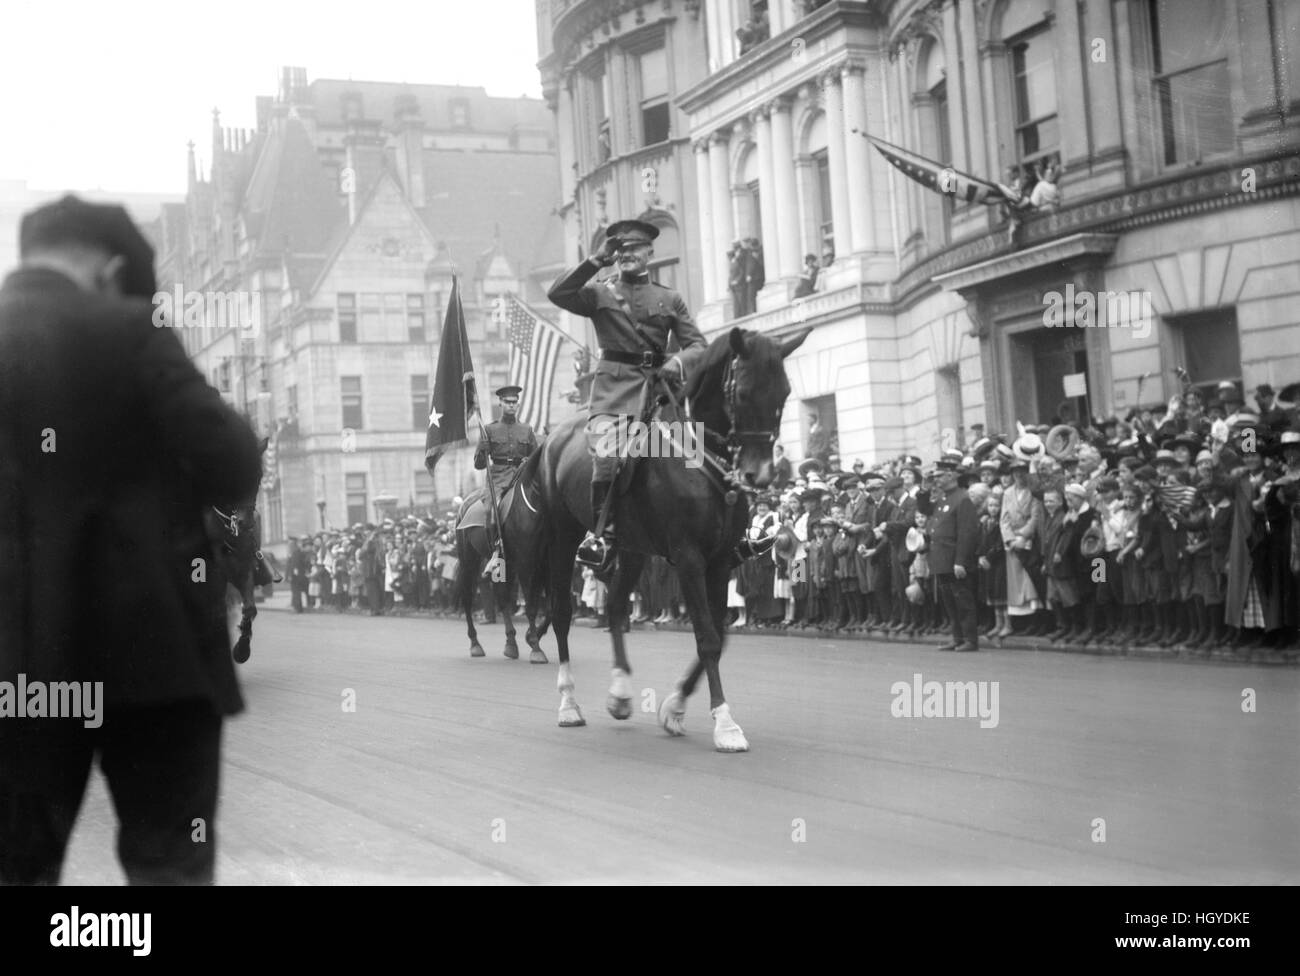 U.S. General John J. Pershing Saluting on Horseback while Leading World War I Veterans during Parade, New York City, New York, USA, Bain News Service, September 10, 1919 Stock Photo